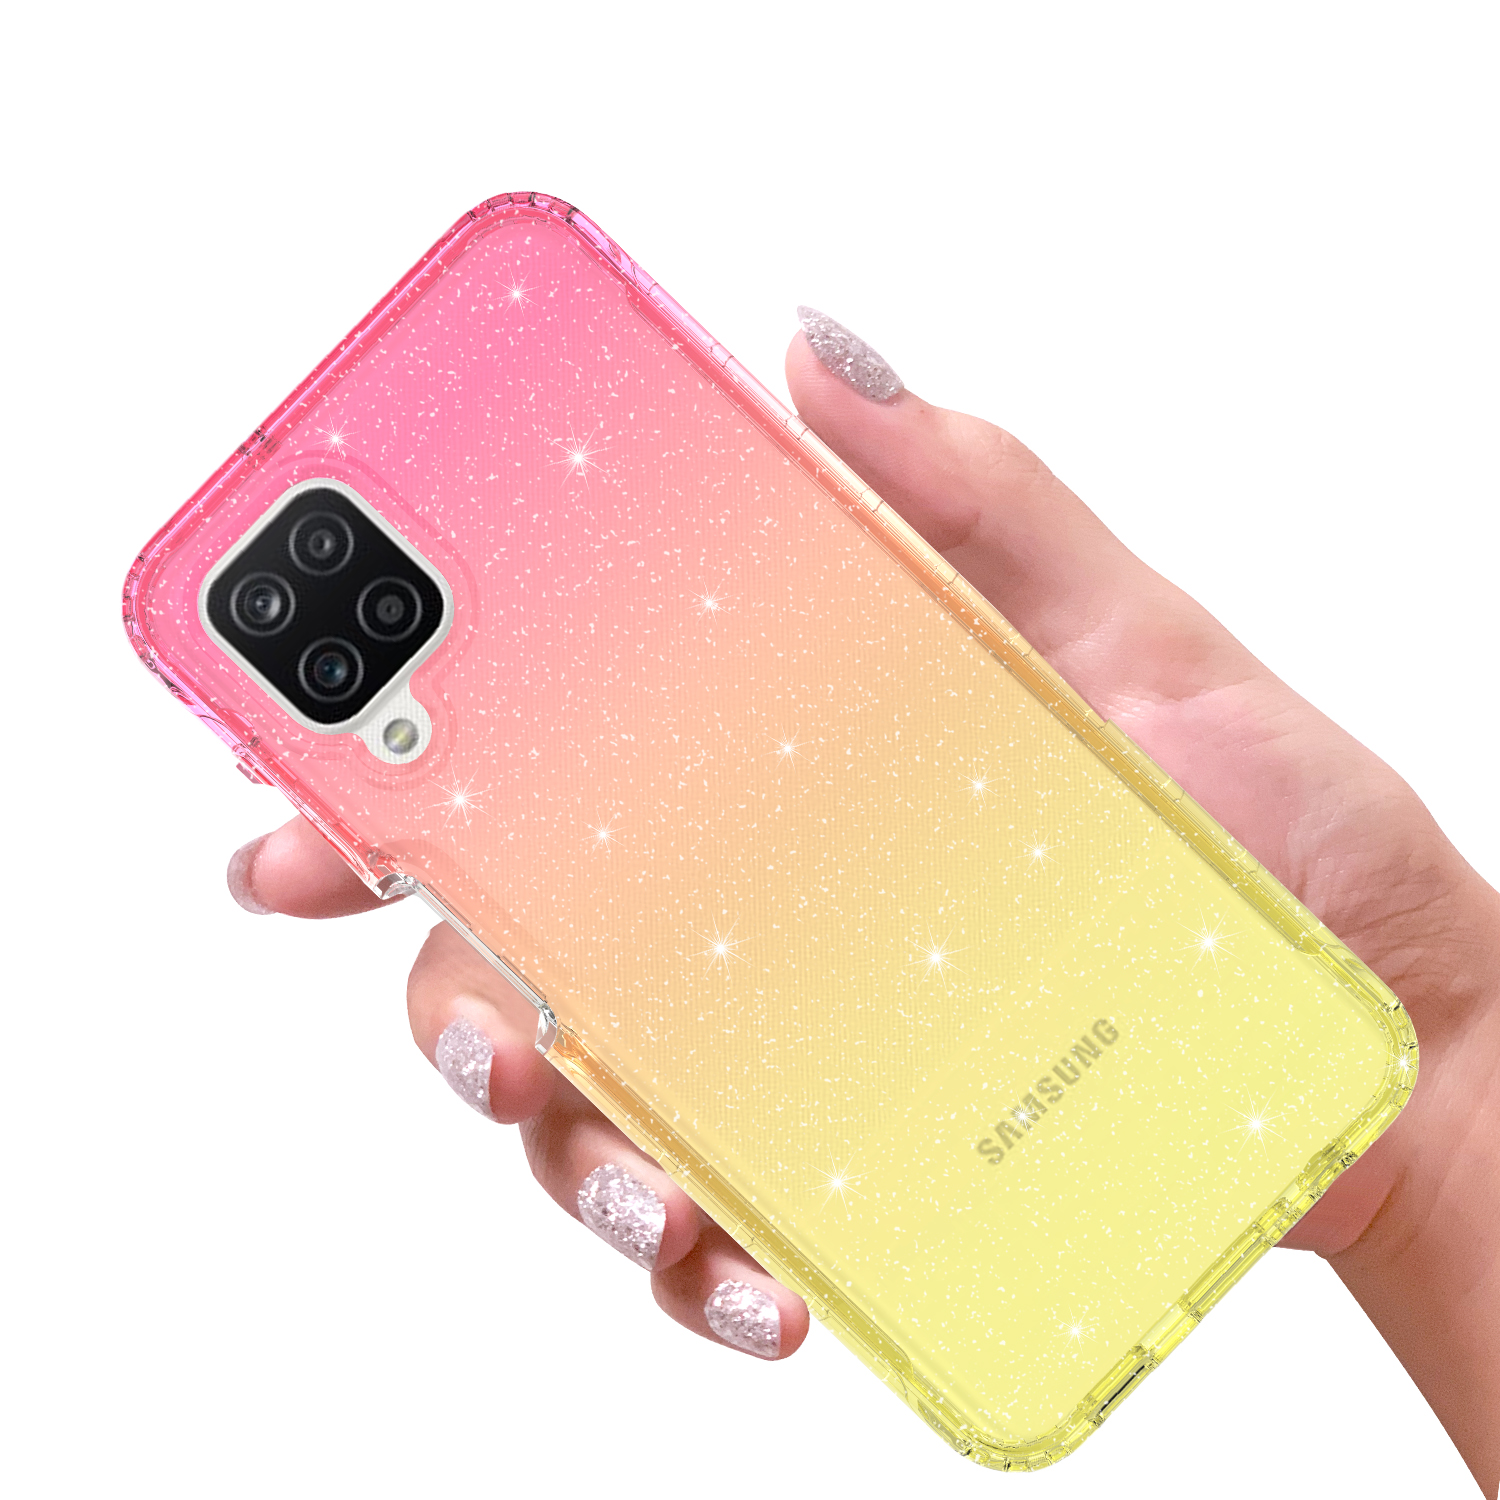 Samsung Galaxy A42 5G Case, Rosebono Hybrid Glitter Sparkle Transparent Colorful Gradient TPU Skin Cover 360 Protection Case For Samsung Galaxy A42 5G (Gold/Pink) - image 3 of 4